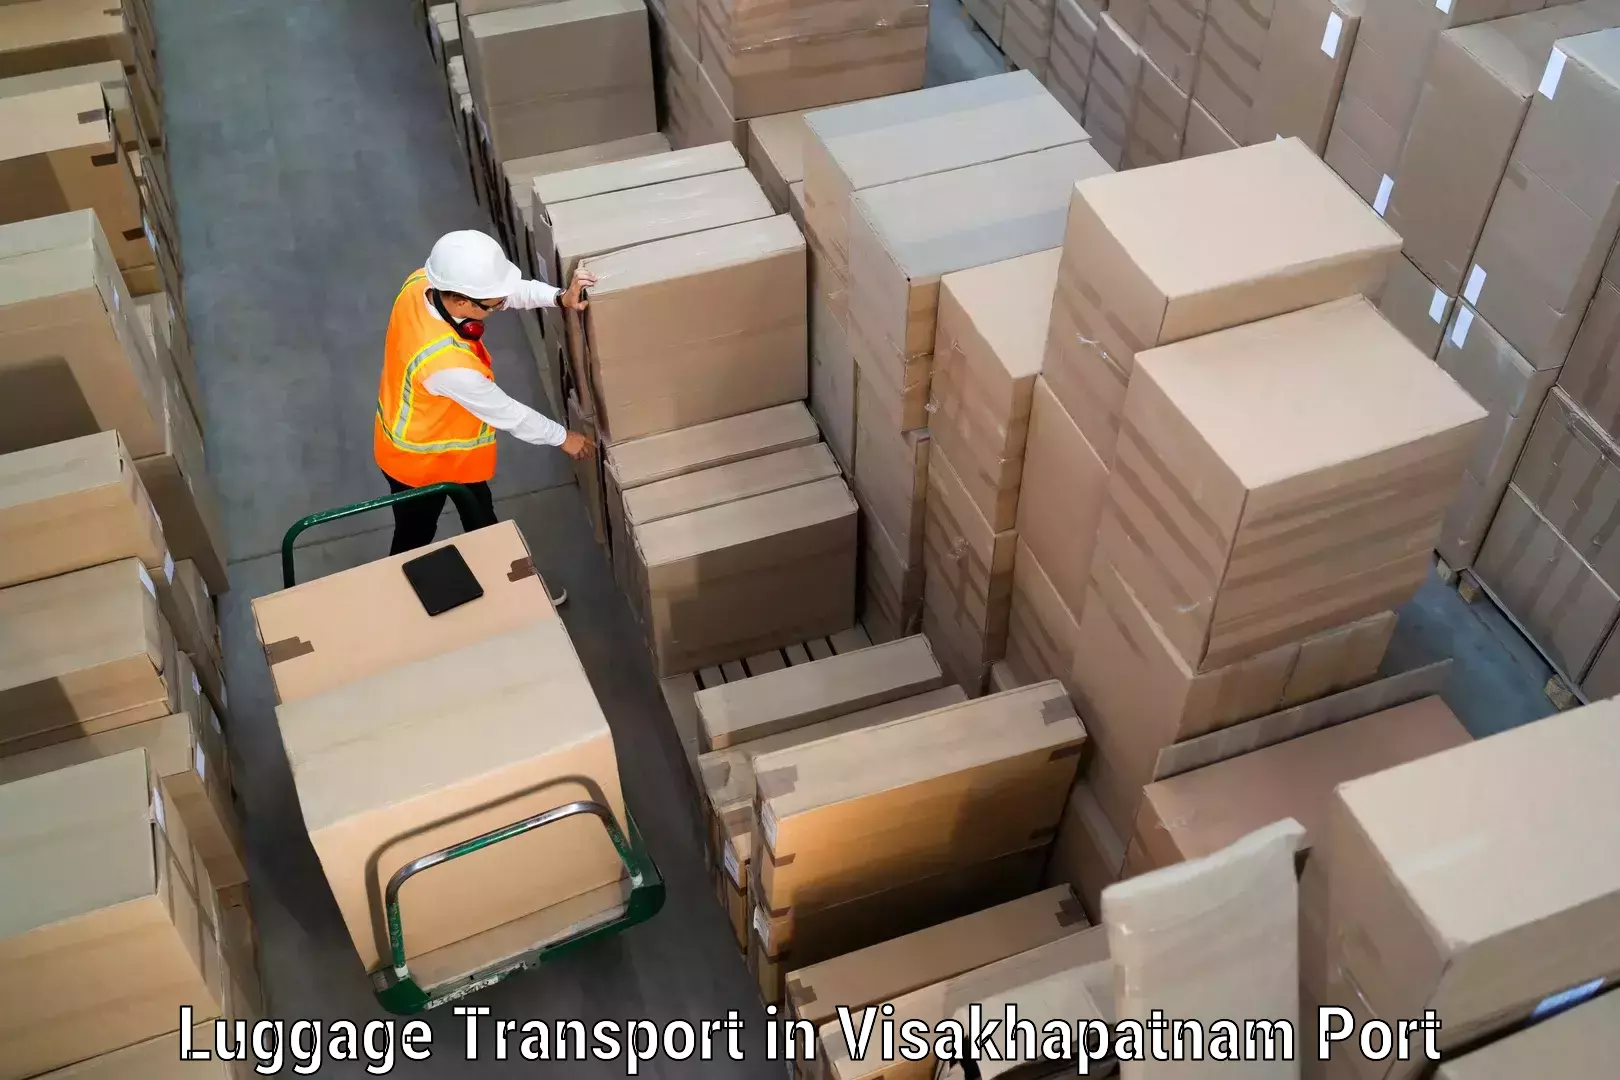 Luggage forwarding service in Visakhapatnam Port